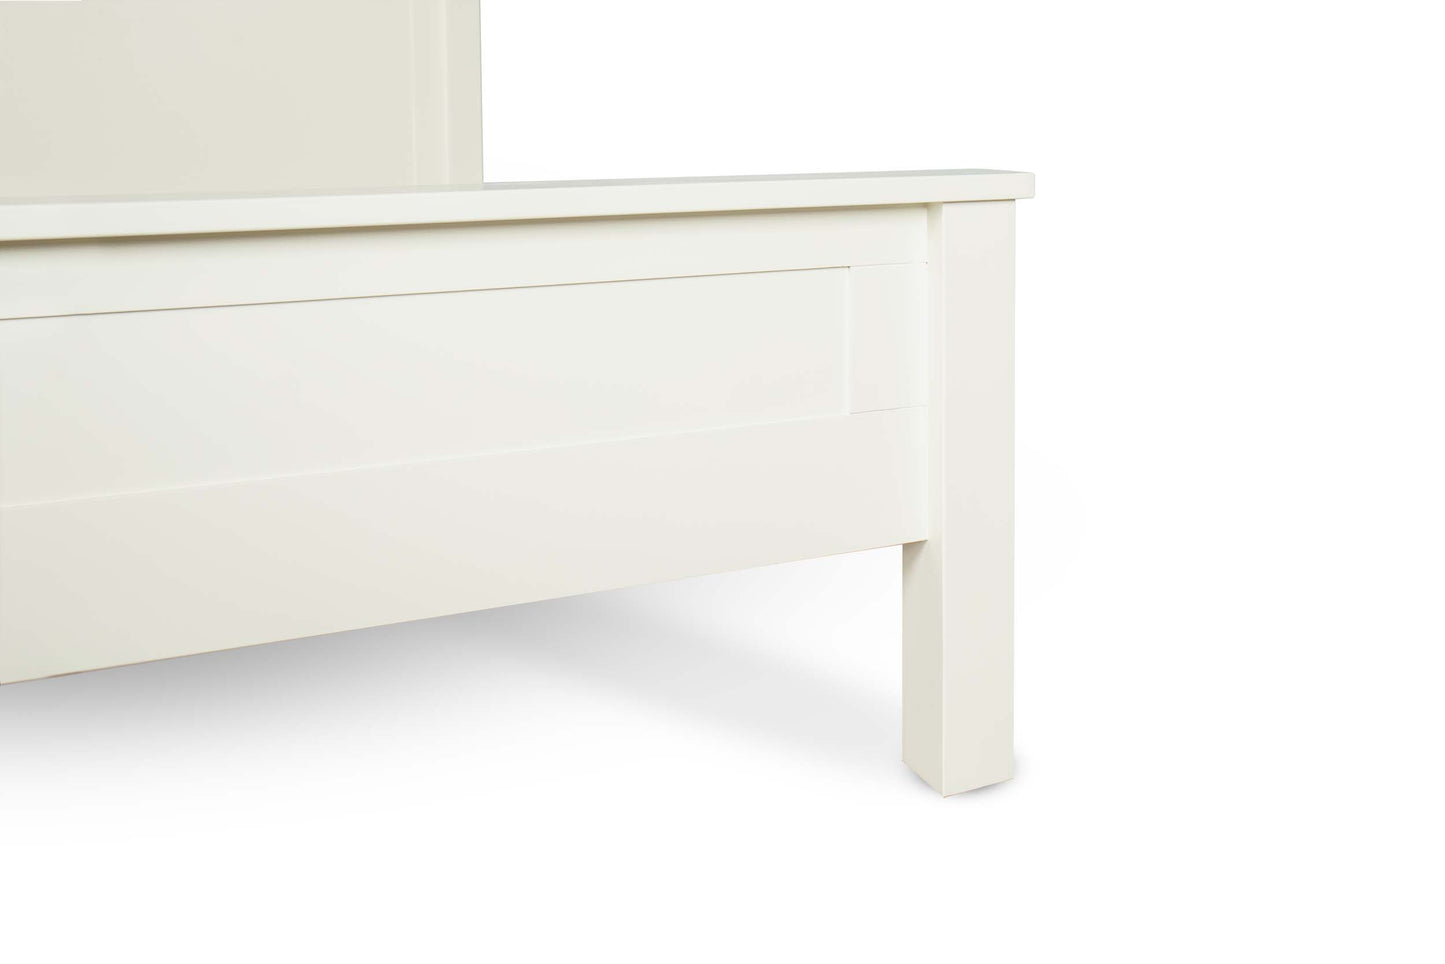 Cambridge Bed Frame - 5ft King Size - Soft White